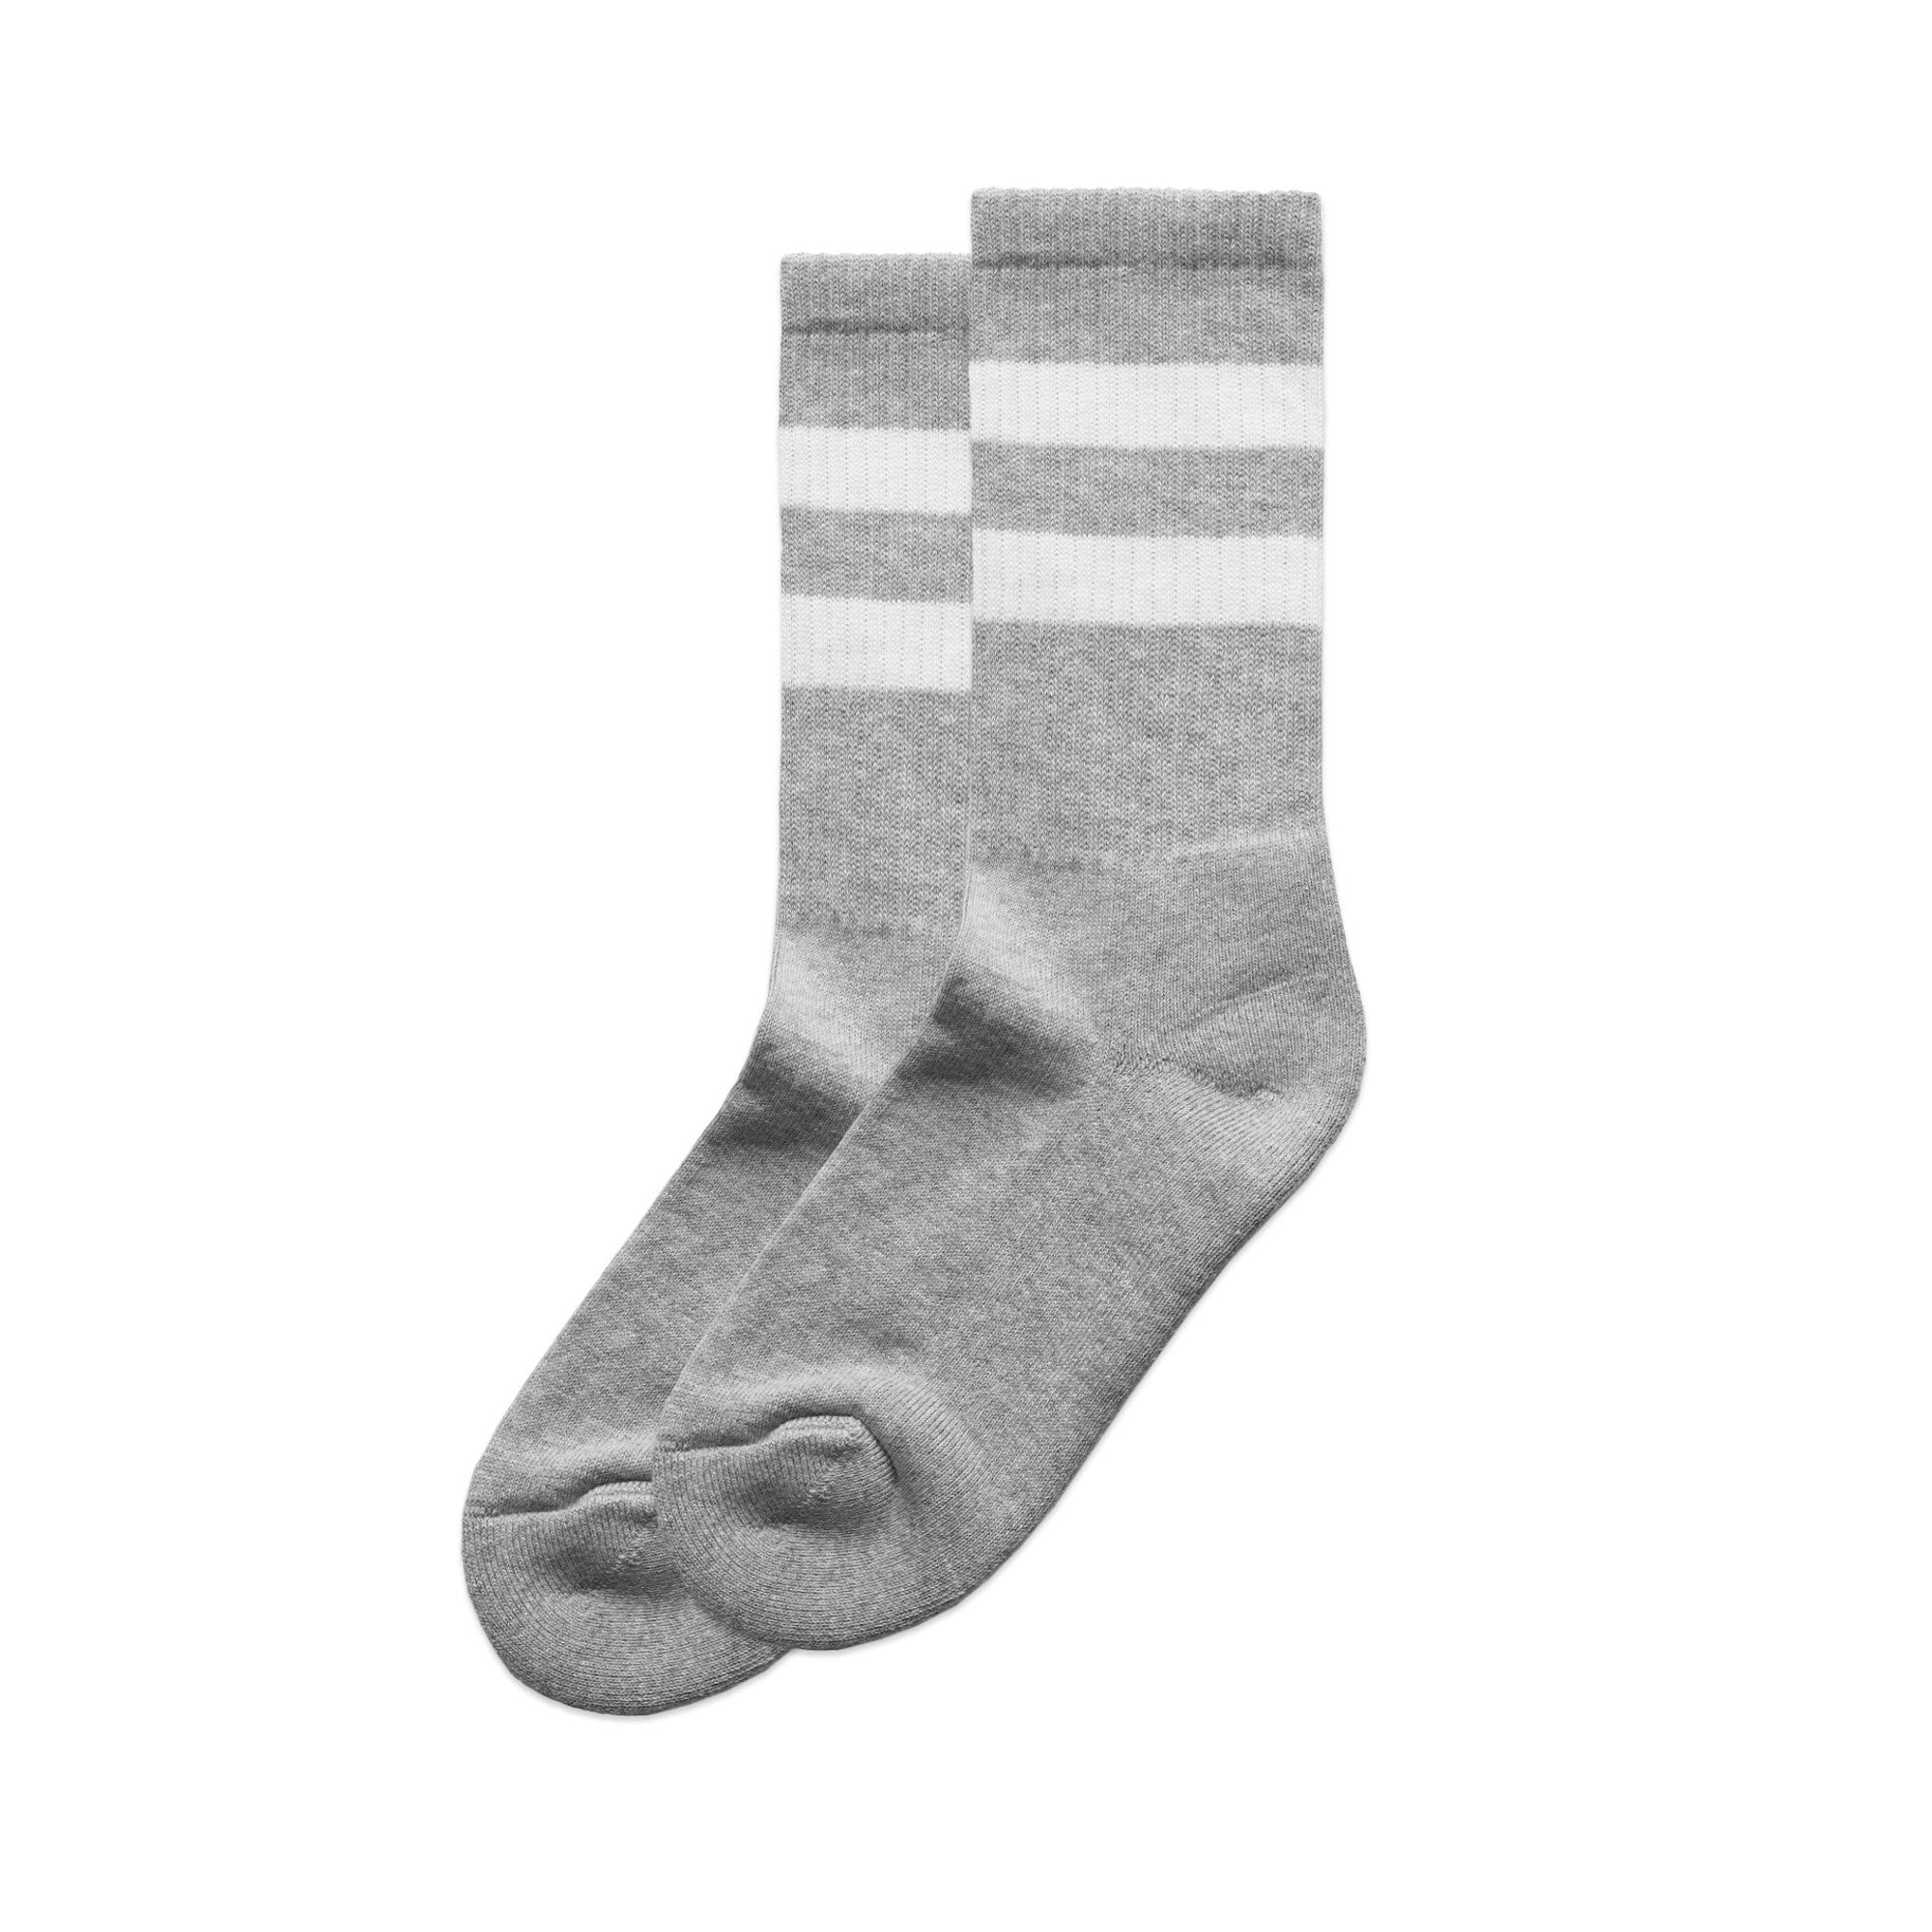 Classic Cotton Striped Socks - JON BLANCO